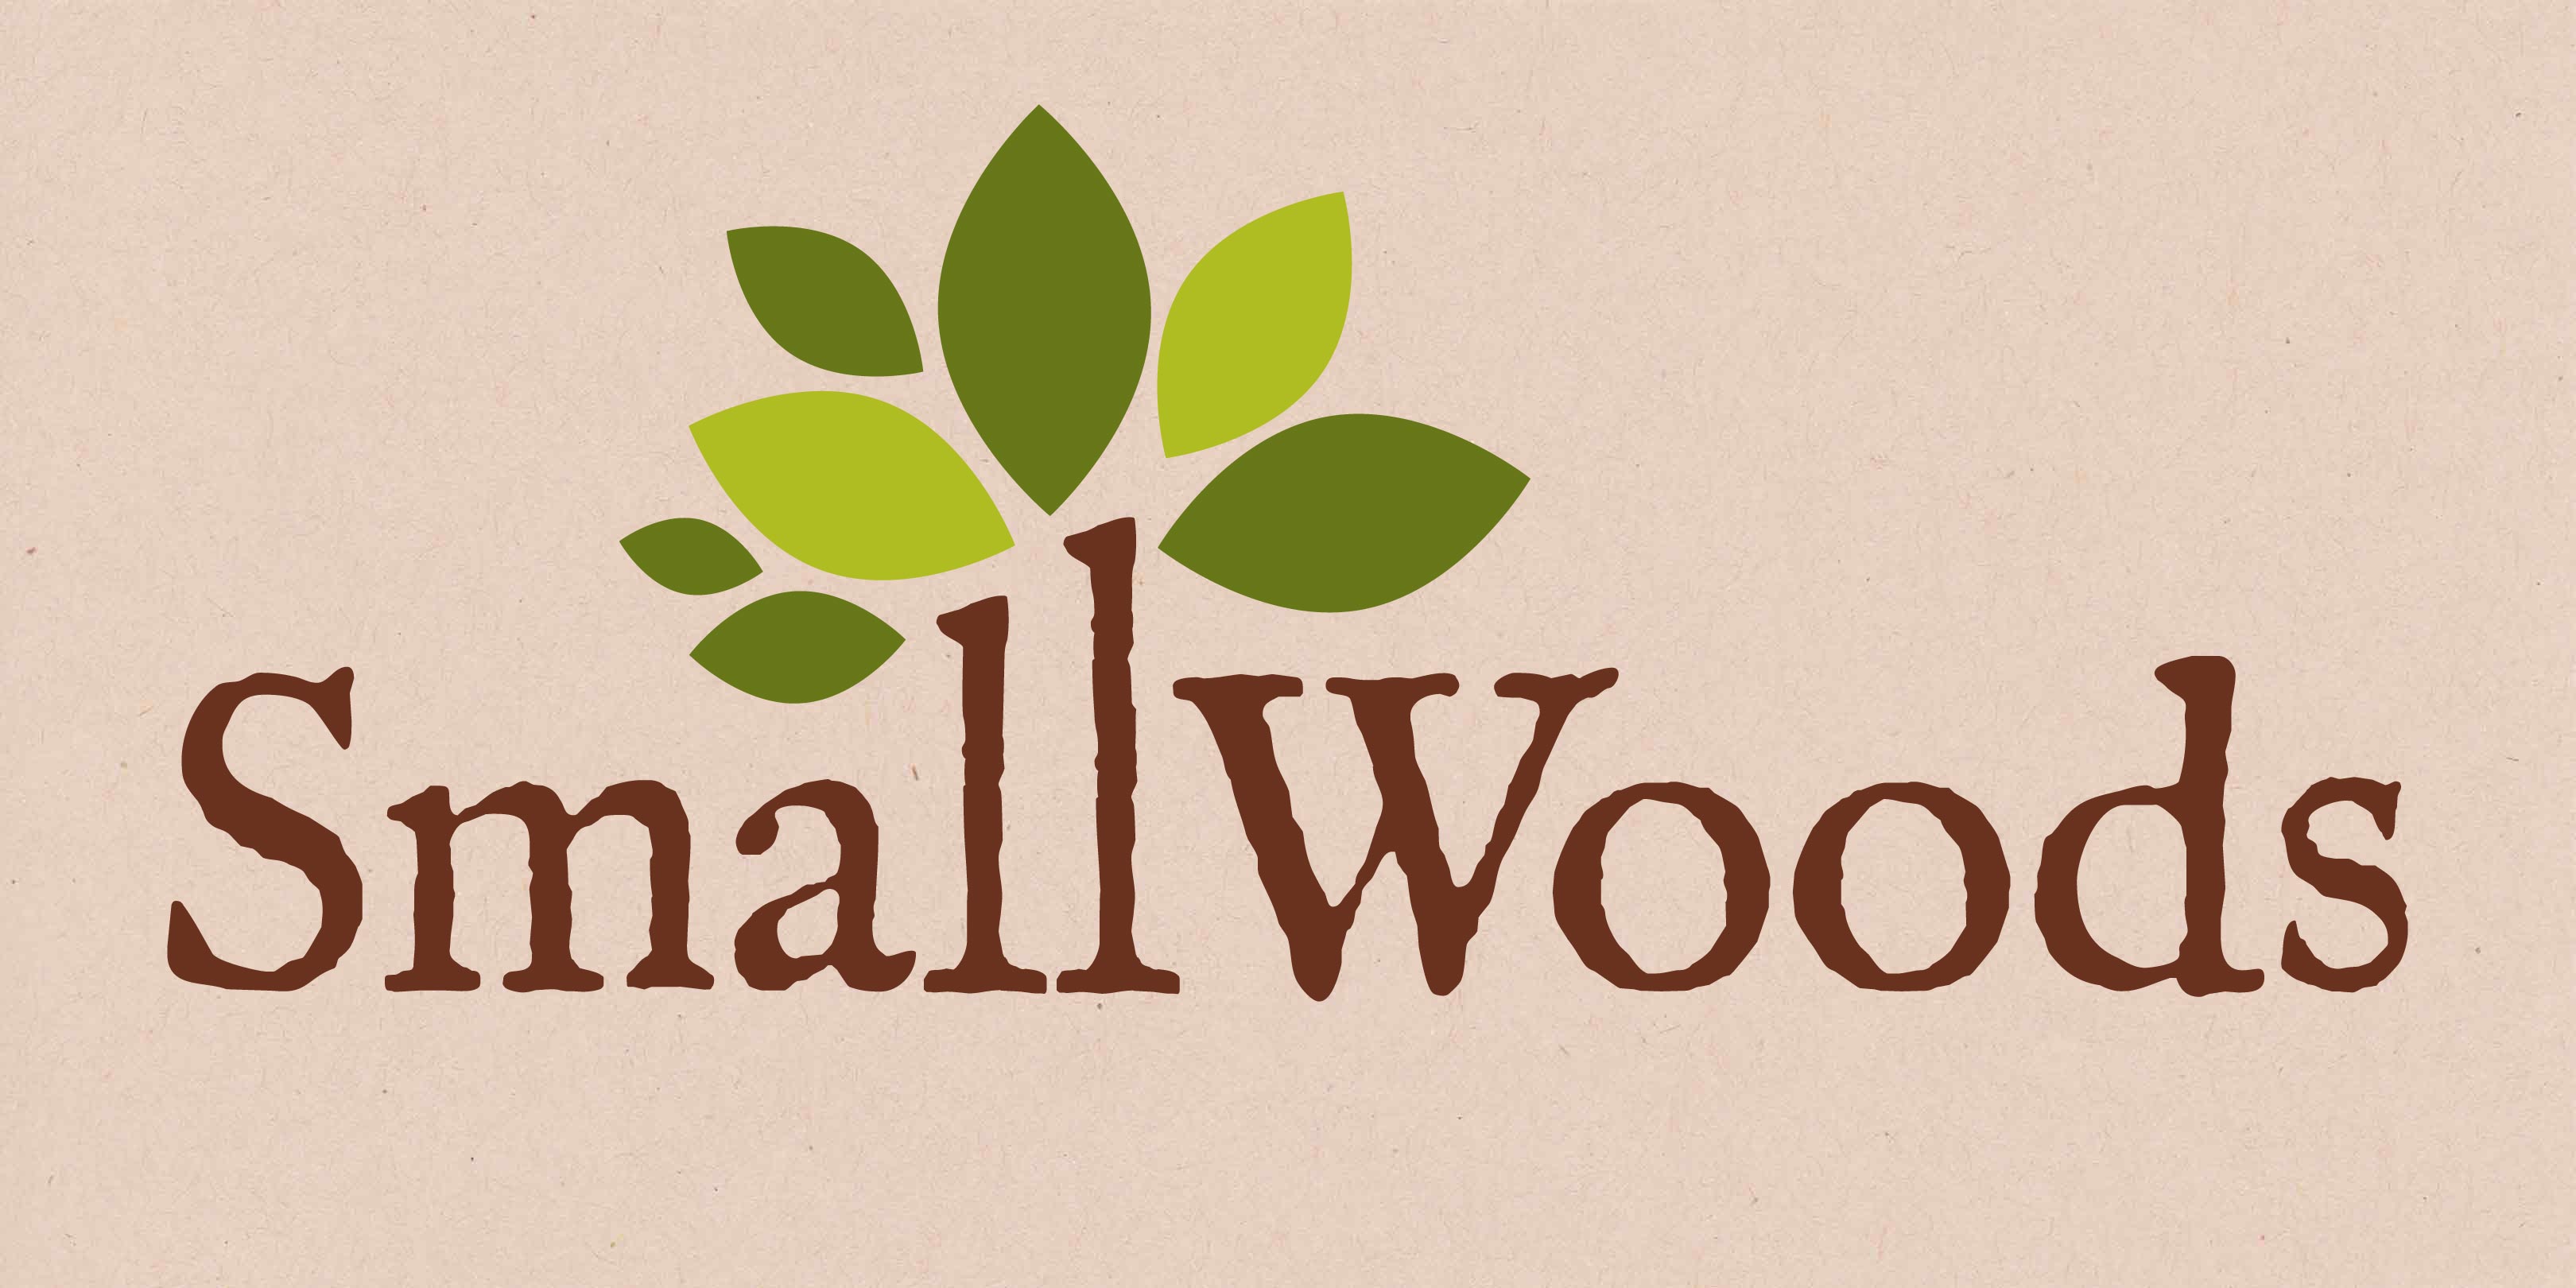 Small Woods logo